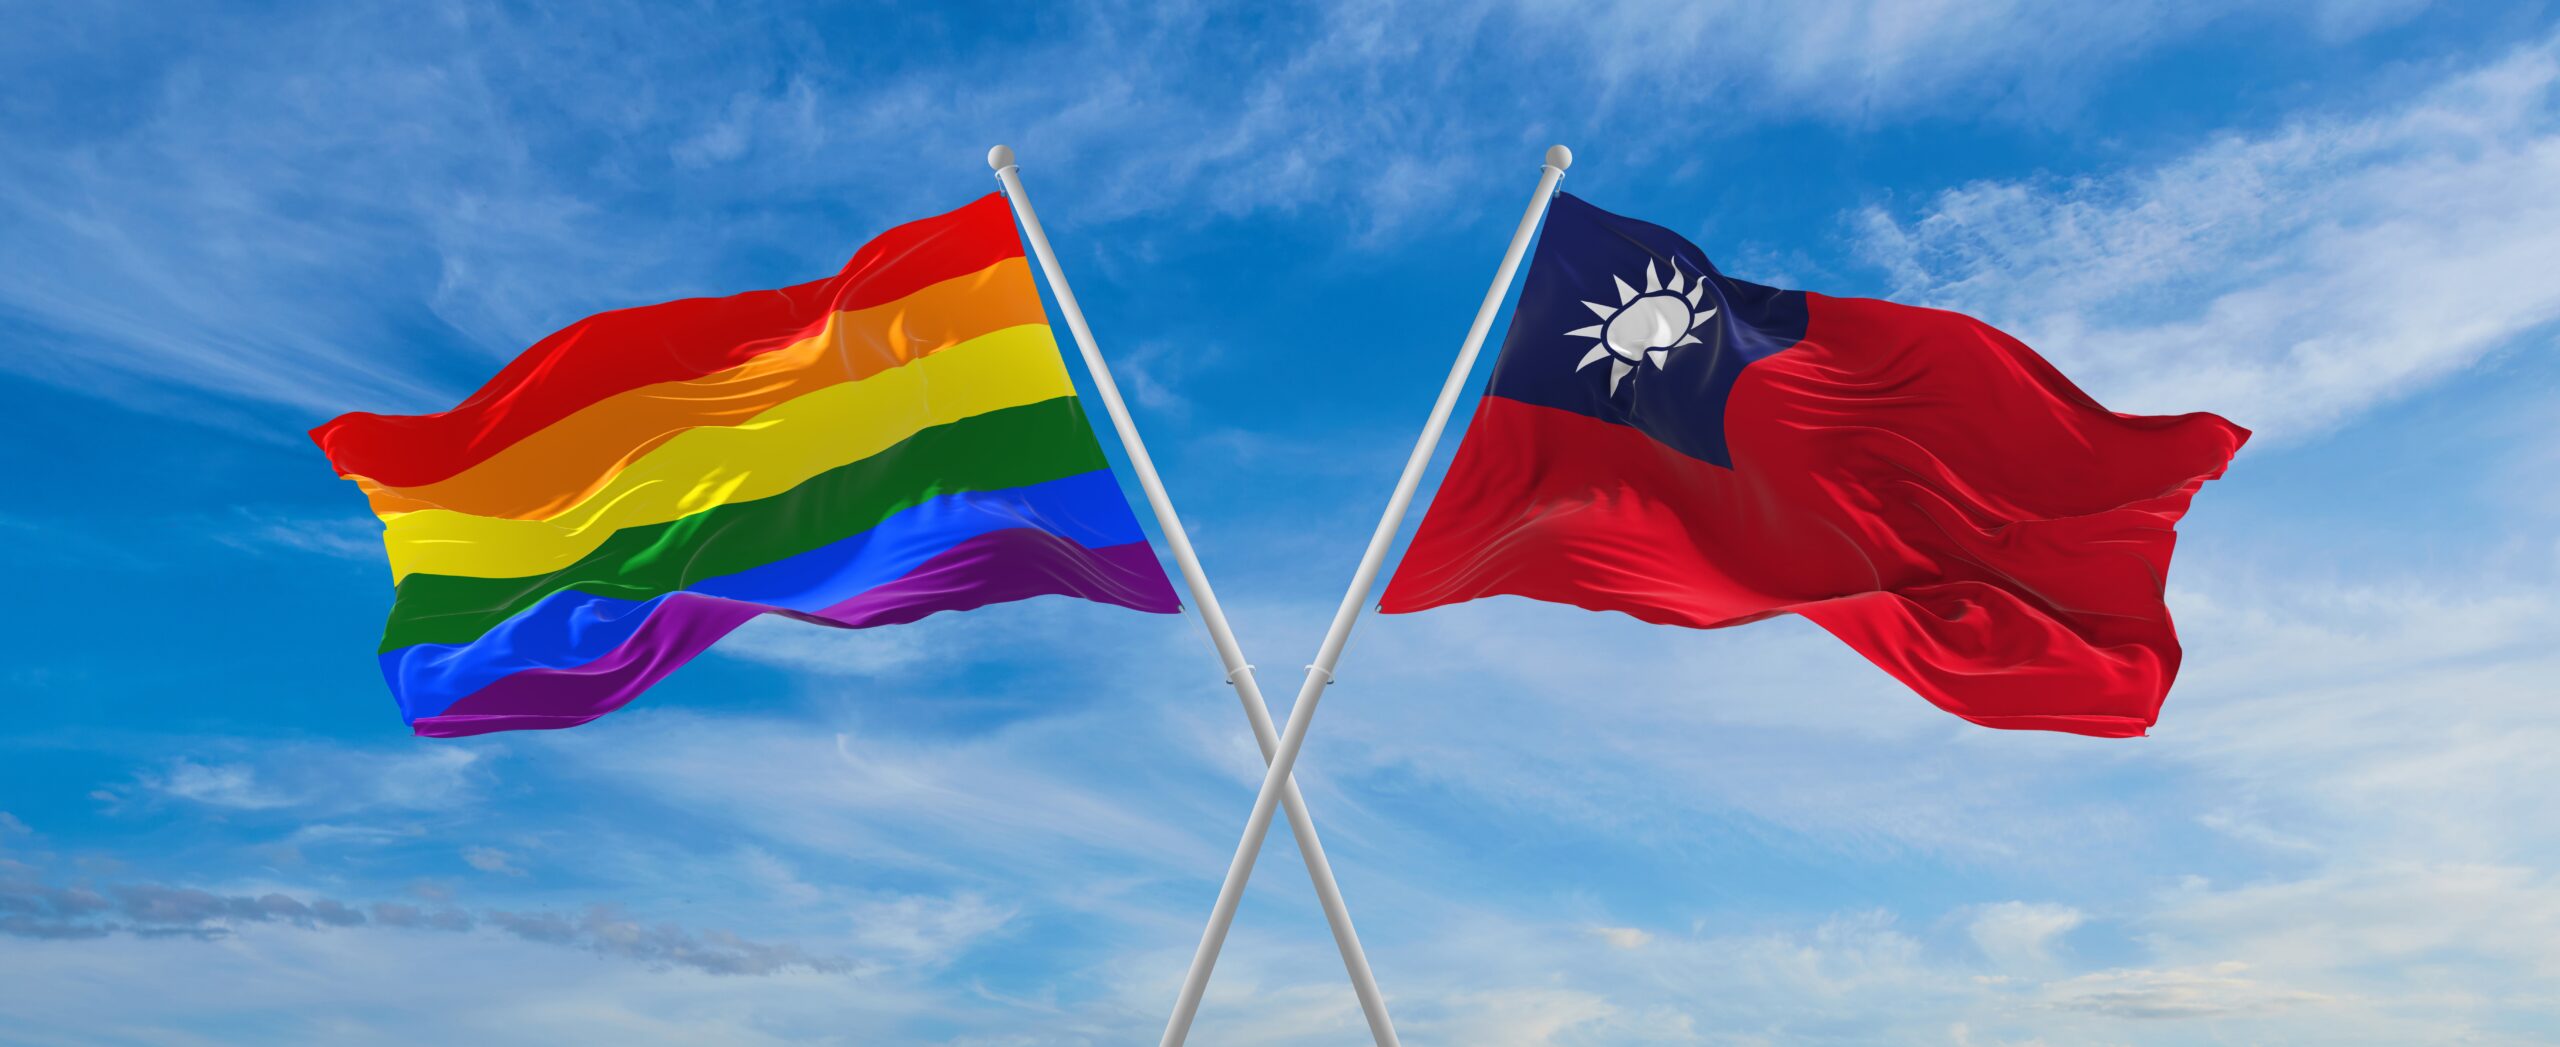 Taiwan Pride (Photo Credit: Chillimix)